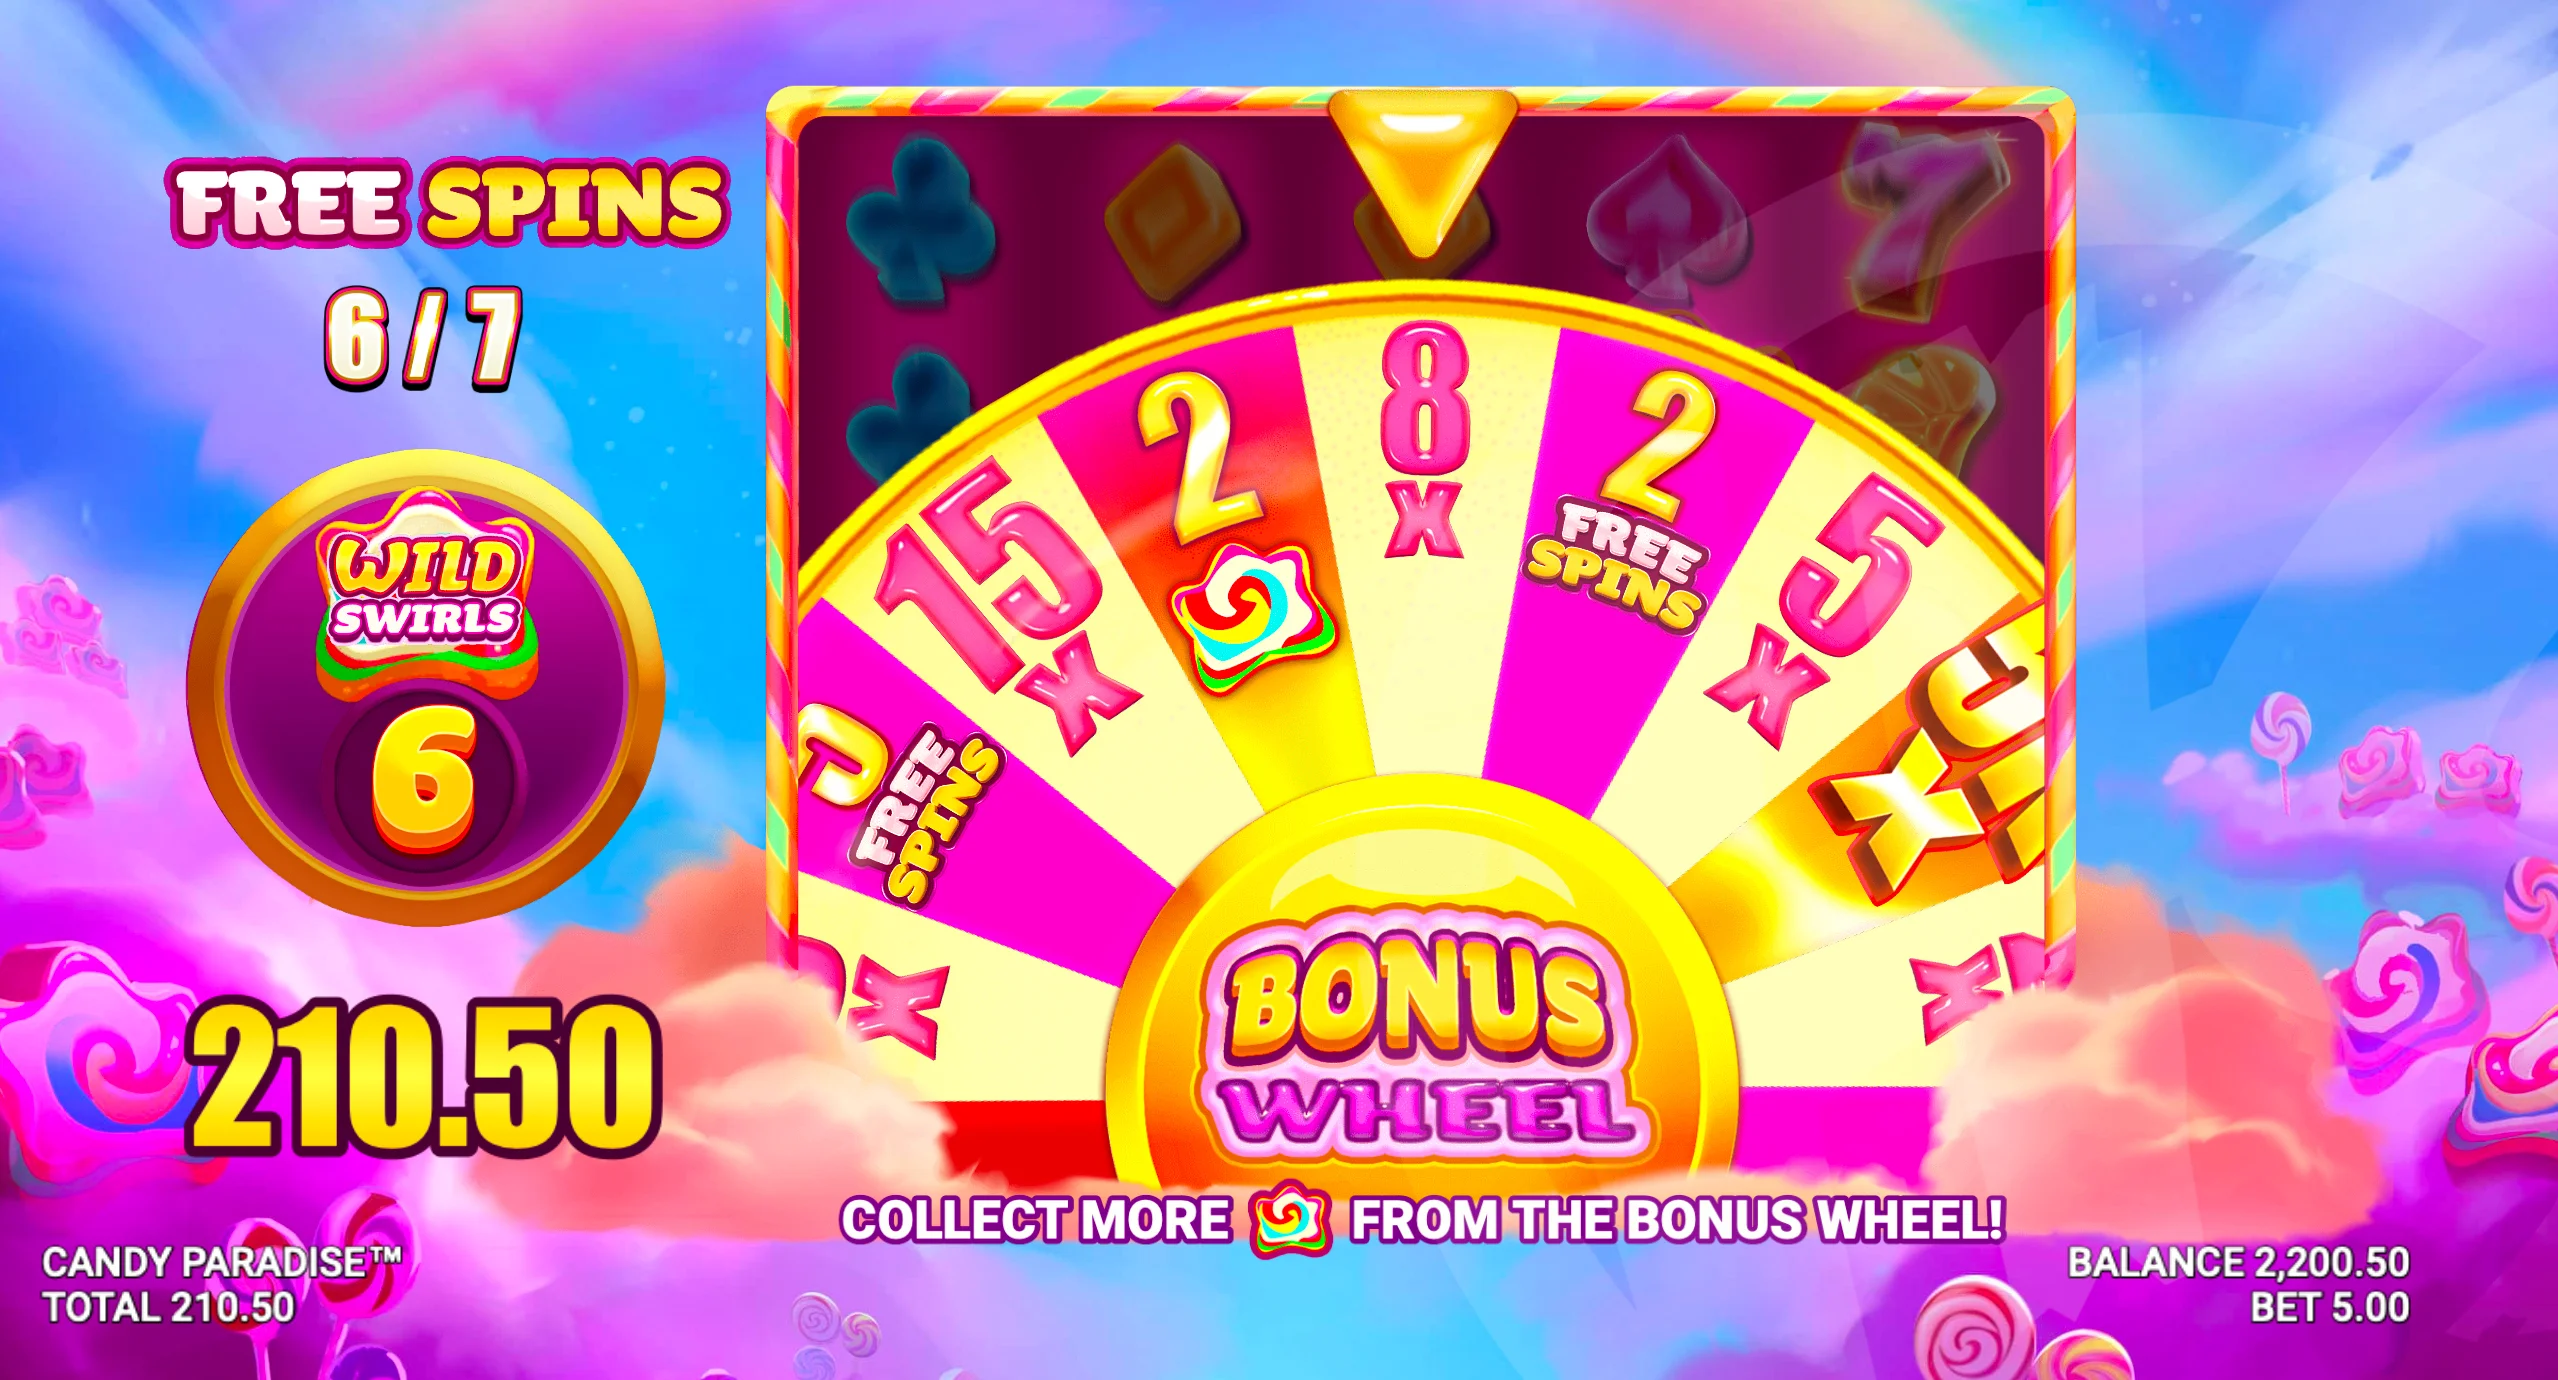 Land 2 Bonus Symbols During Free Spins to Trigger the Bonus Wheel